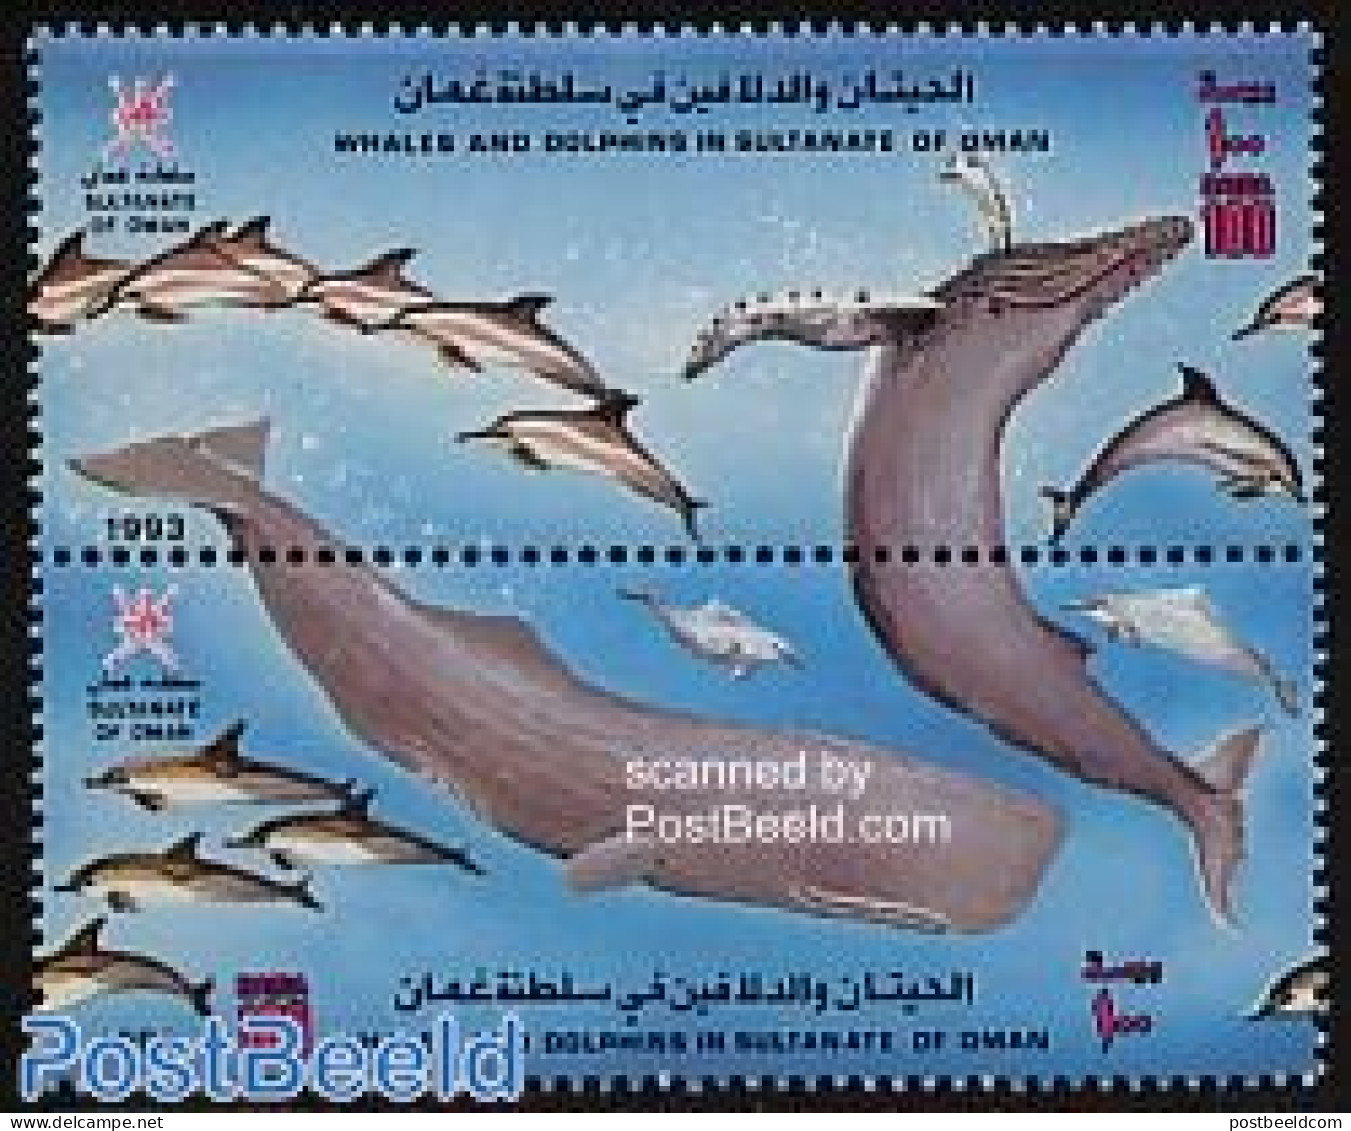 Oman 1993 Whales & Dolphins 2v [:], Mint NH, Nature - Sea Mammals - Omán